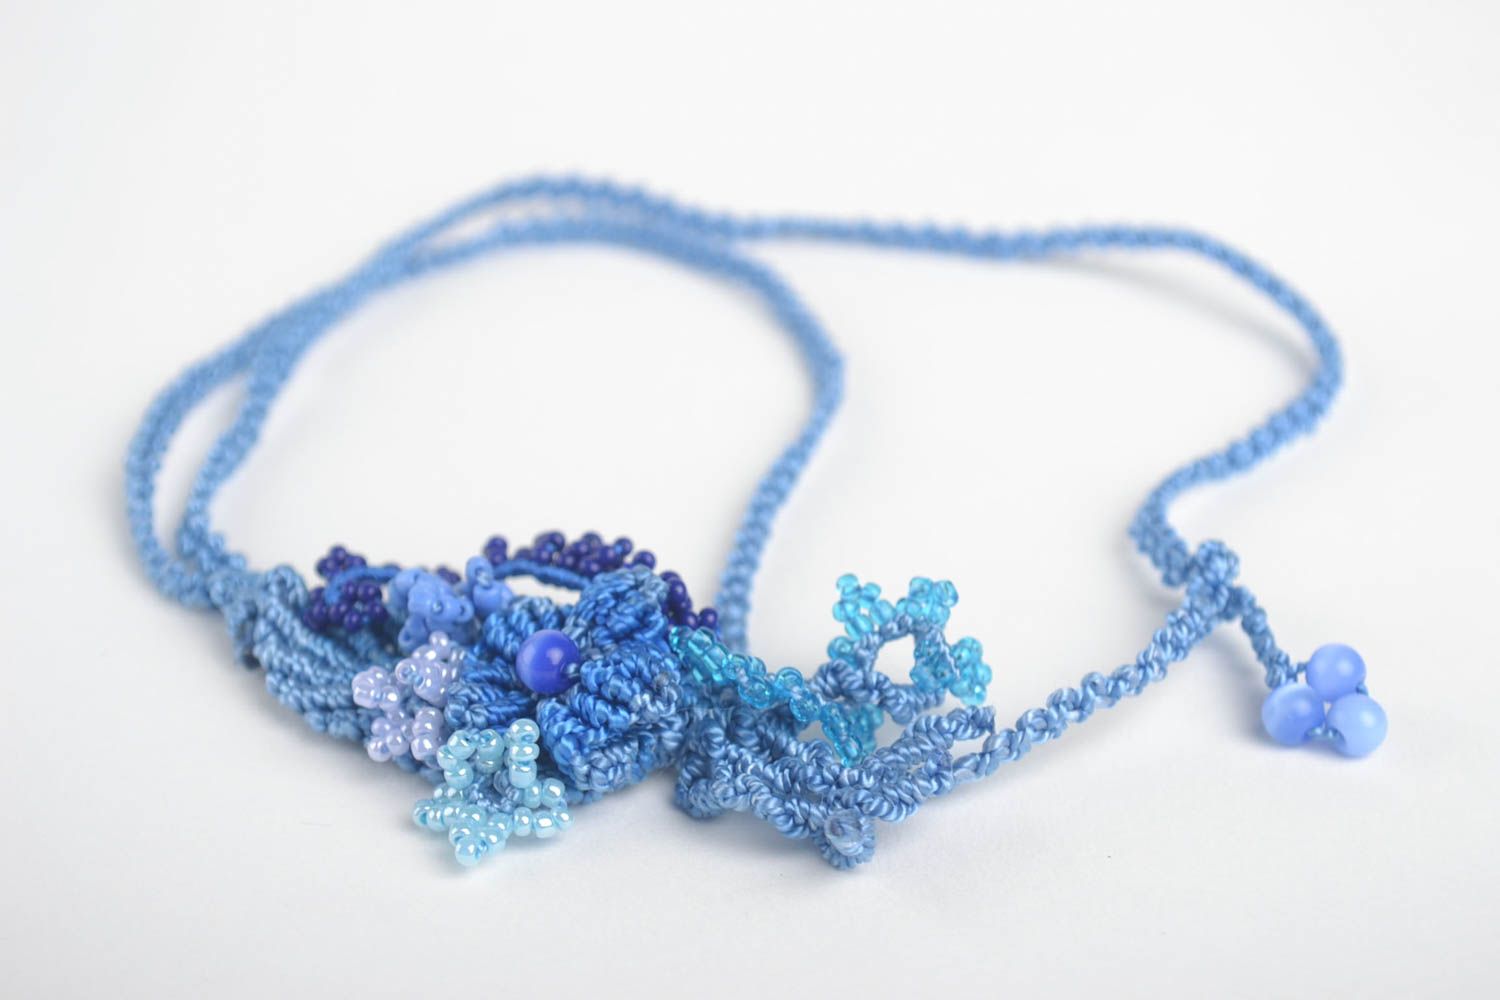 Handmade pendant macrame pendant designer jewelry unusual gift for girls photo 4